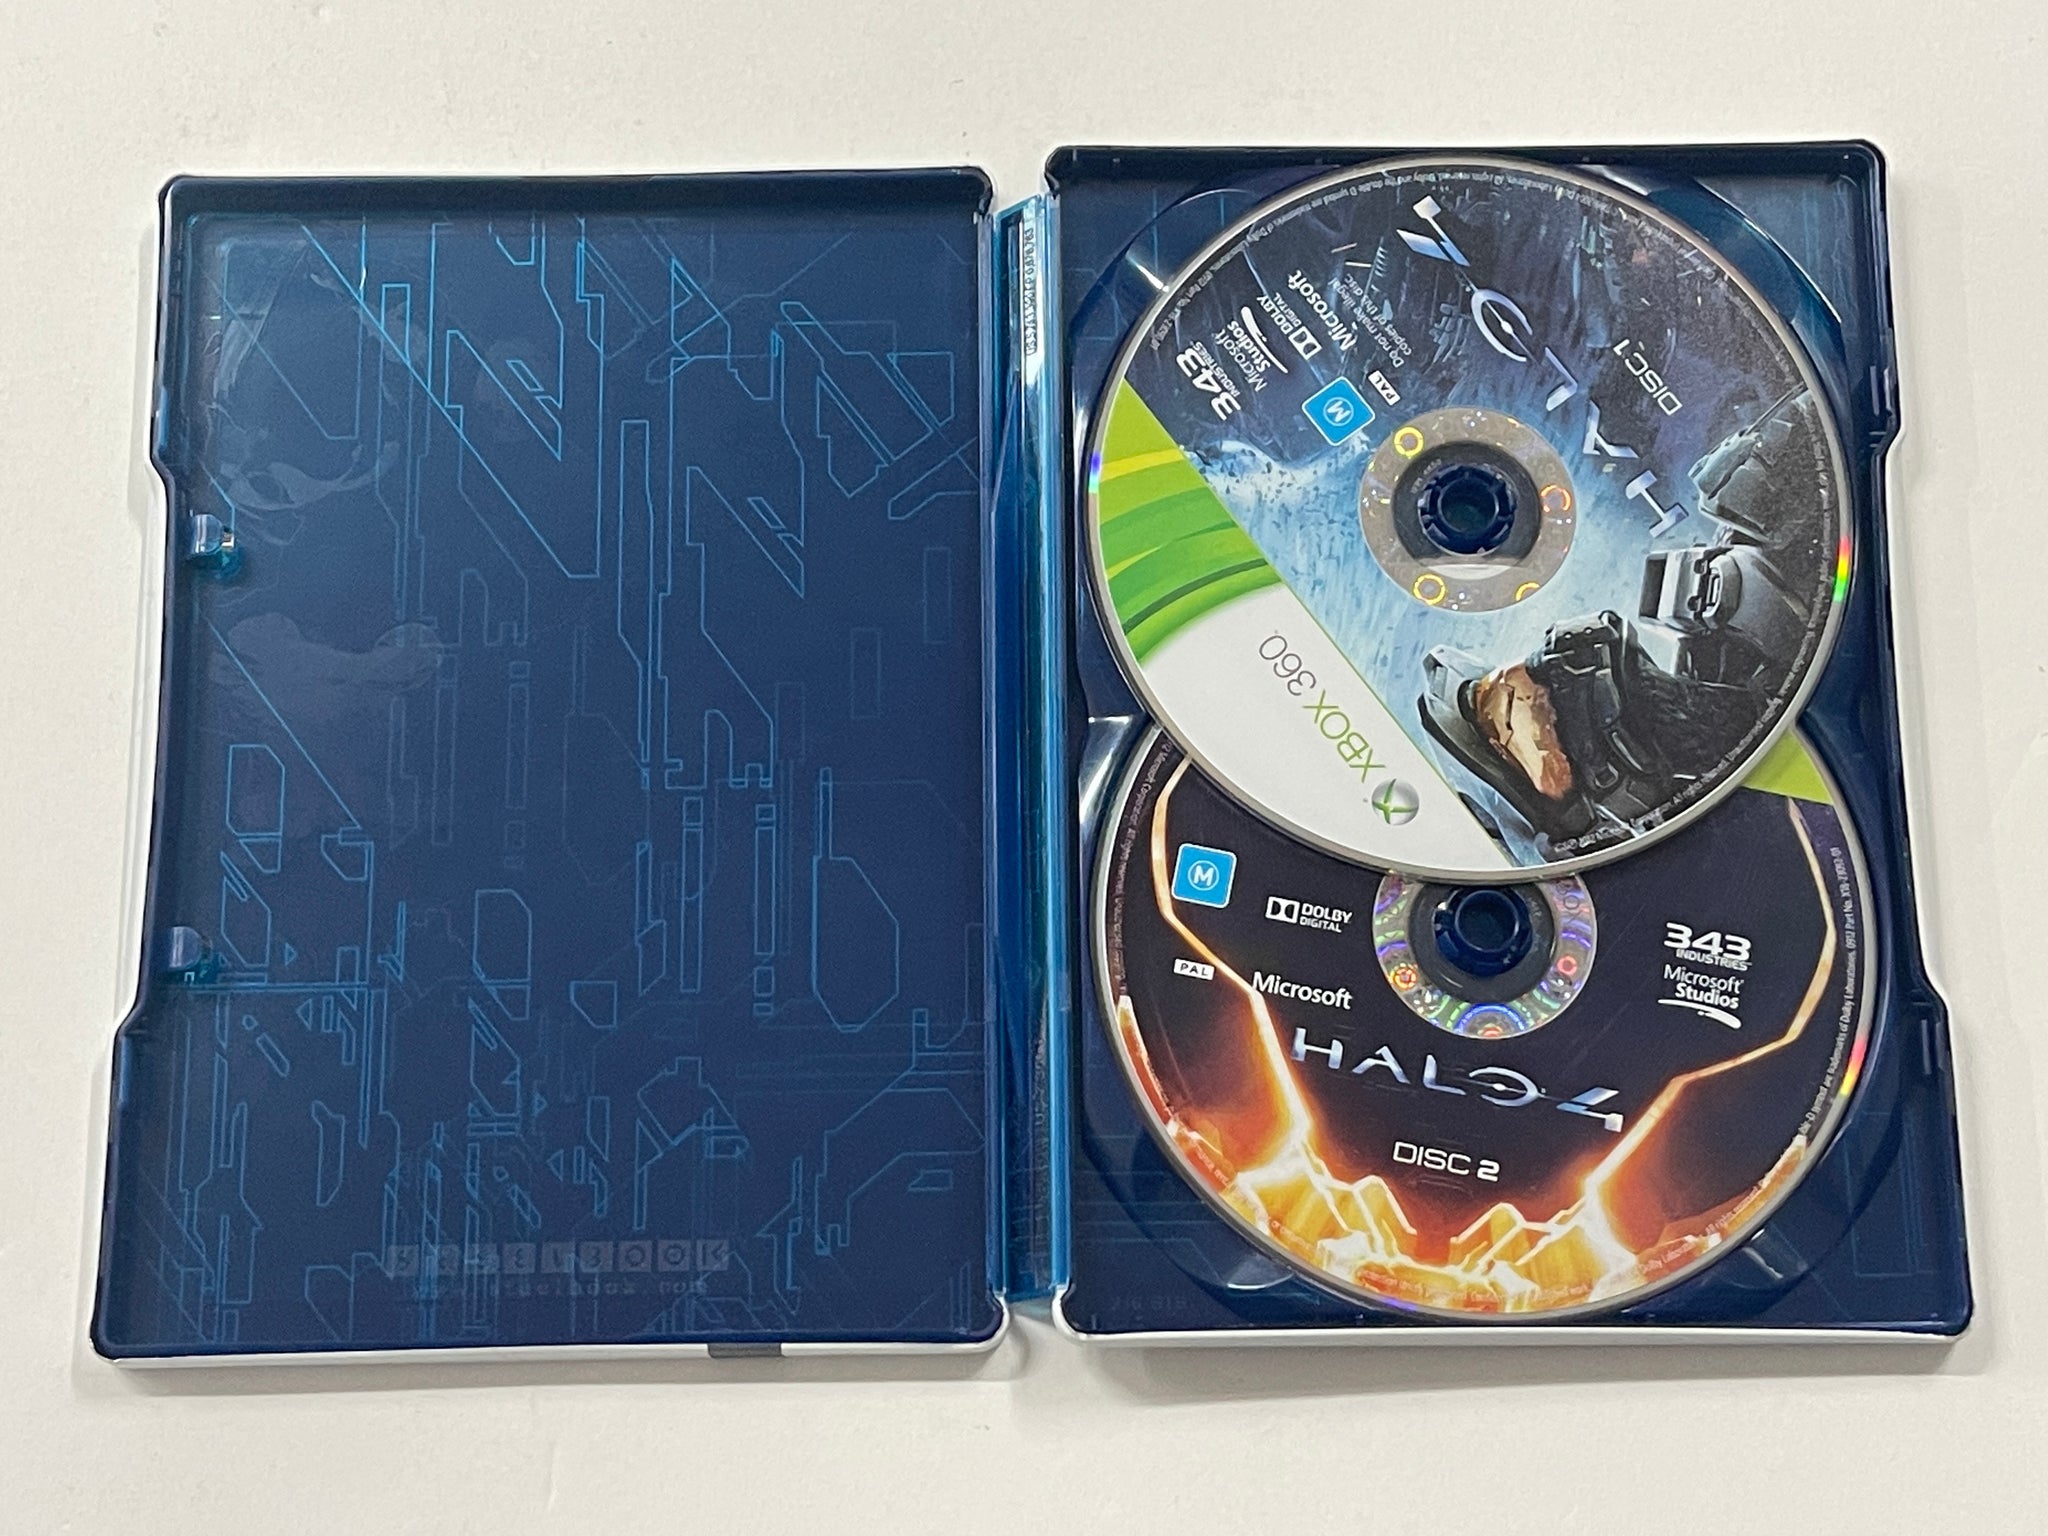 Halo 4 Complete In Original Steelbook Case